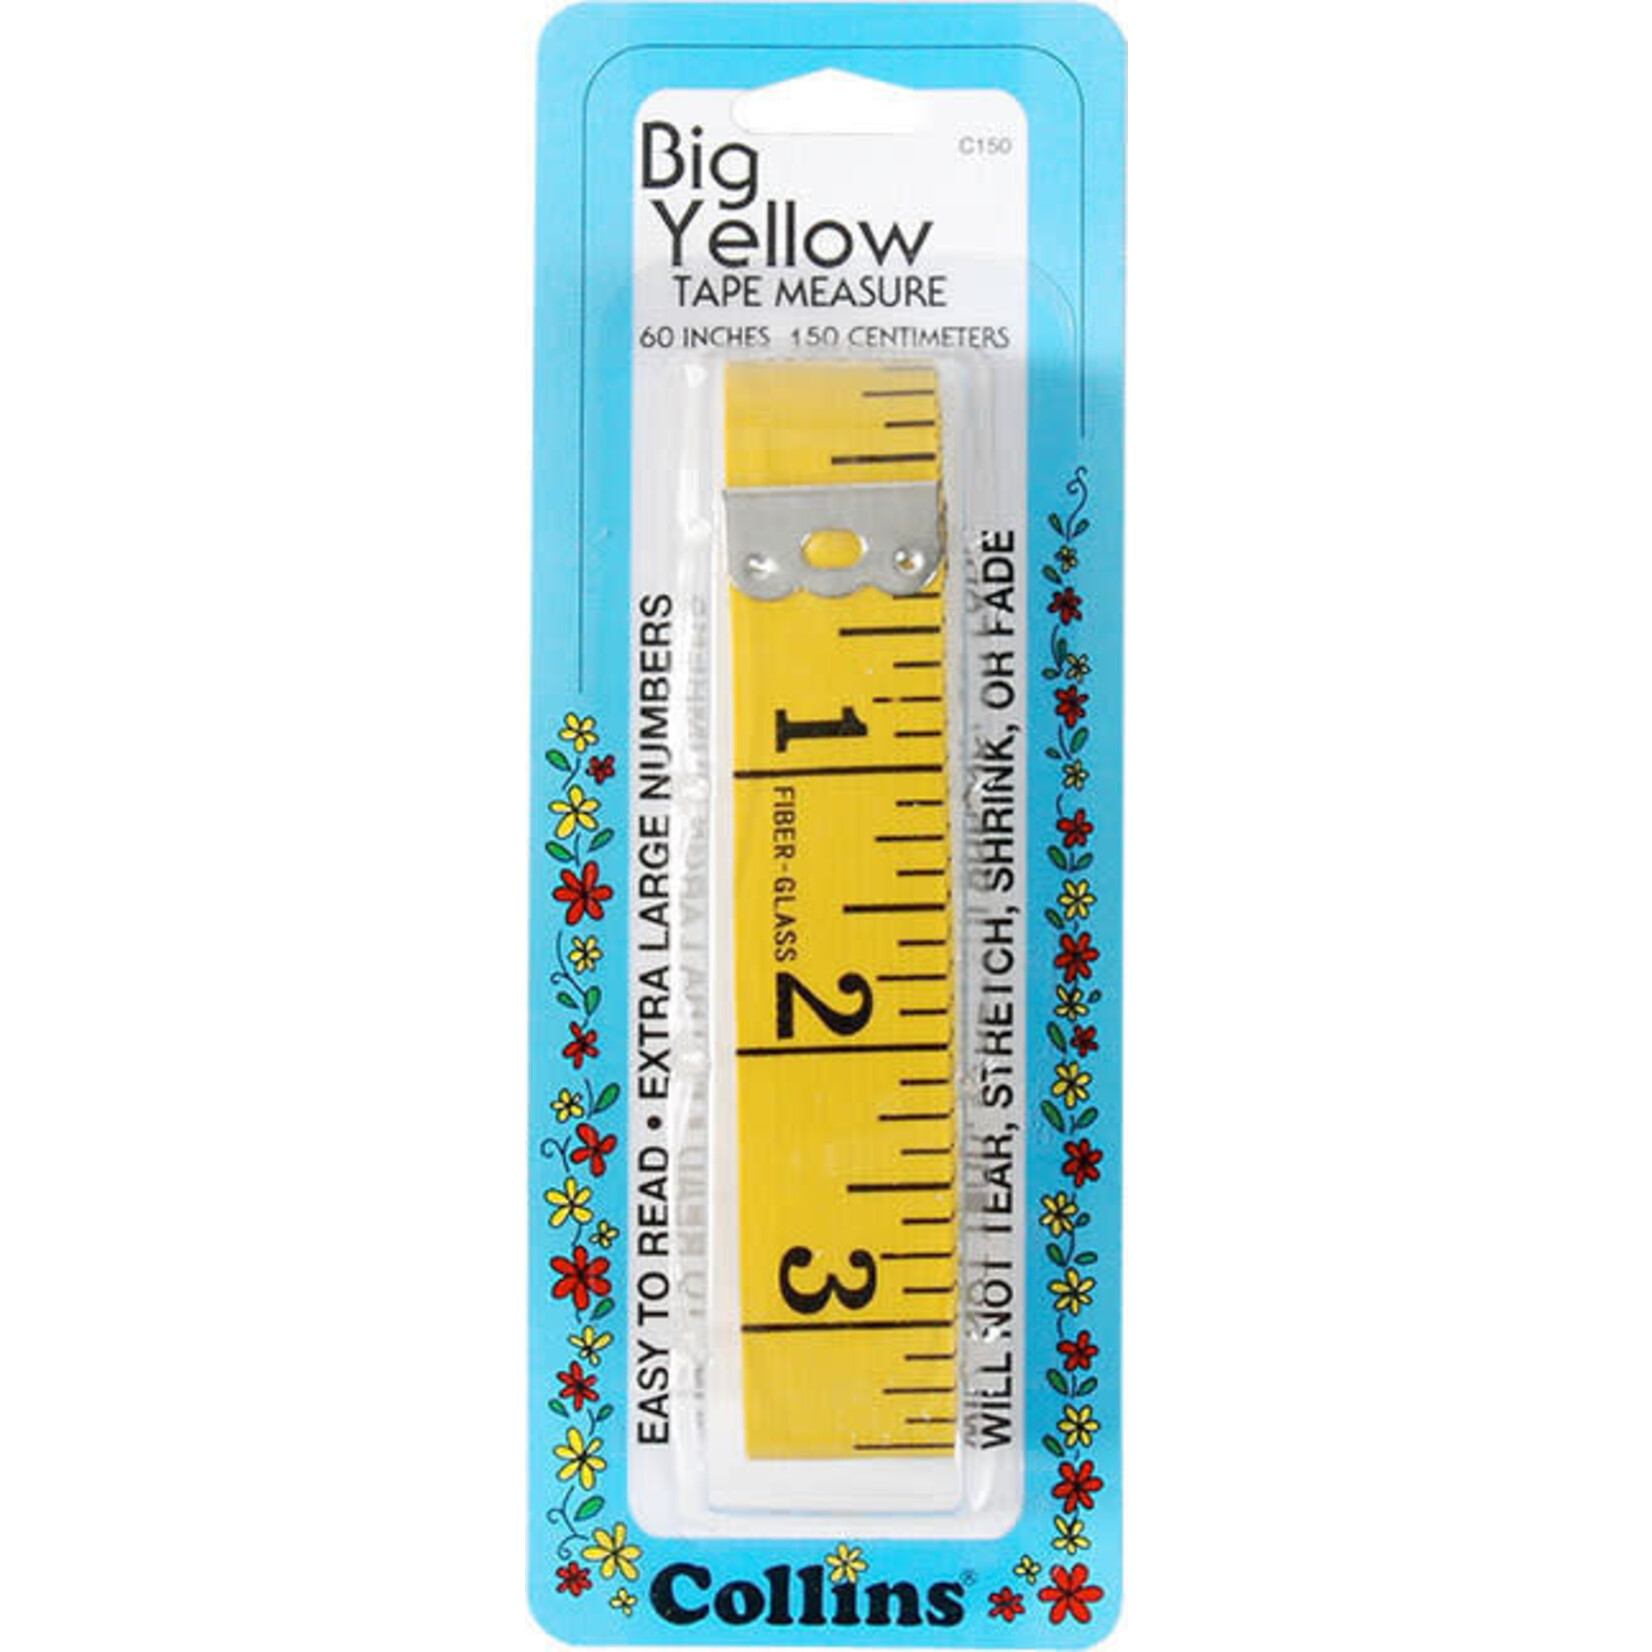 Collins Big Yellow Tape Measure